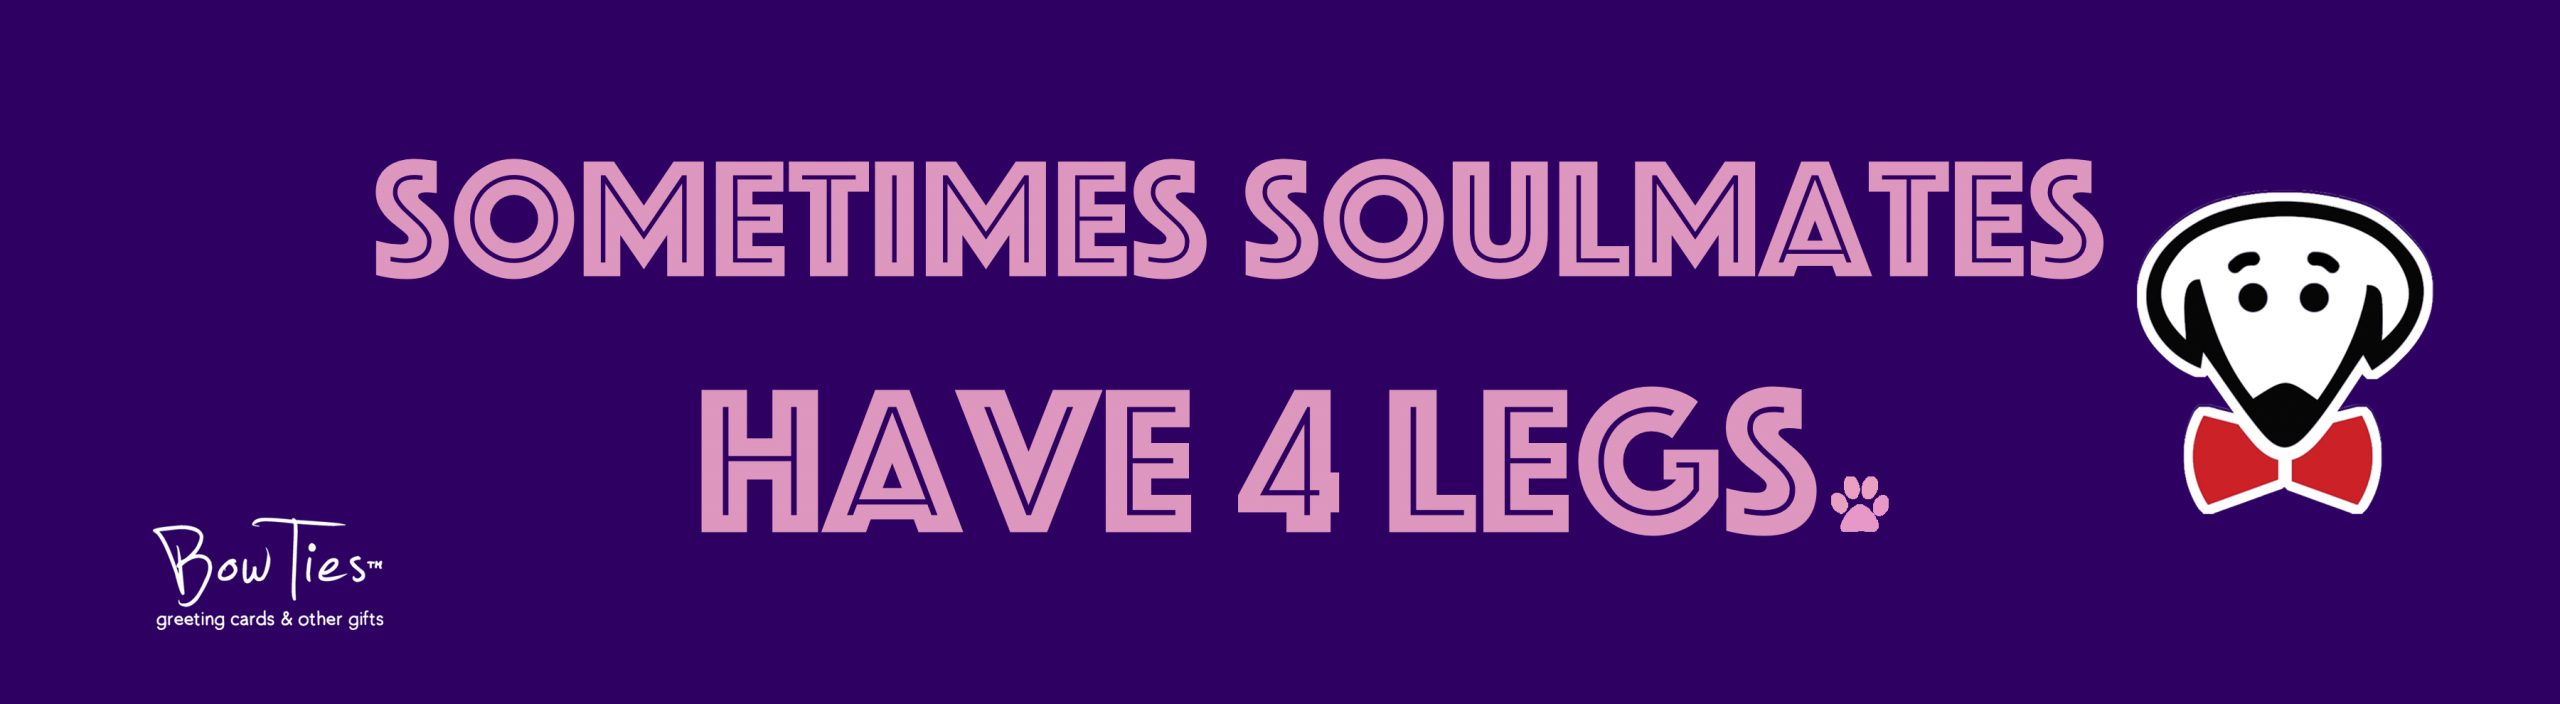 Sometimes soulmates have 4 legs – sticker